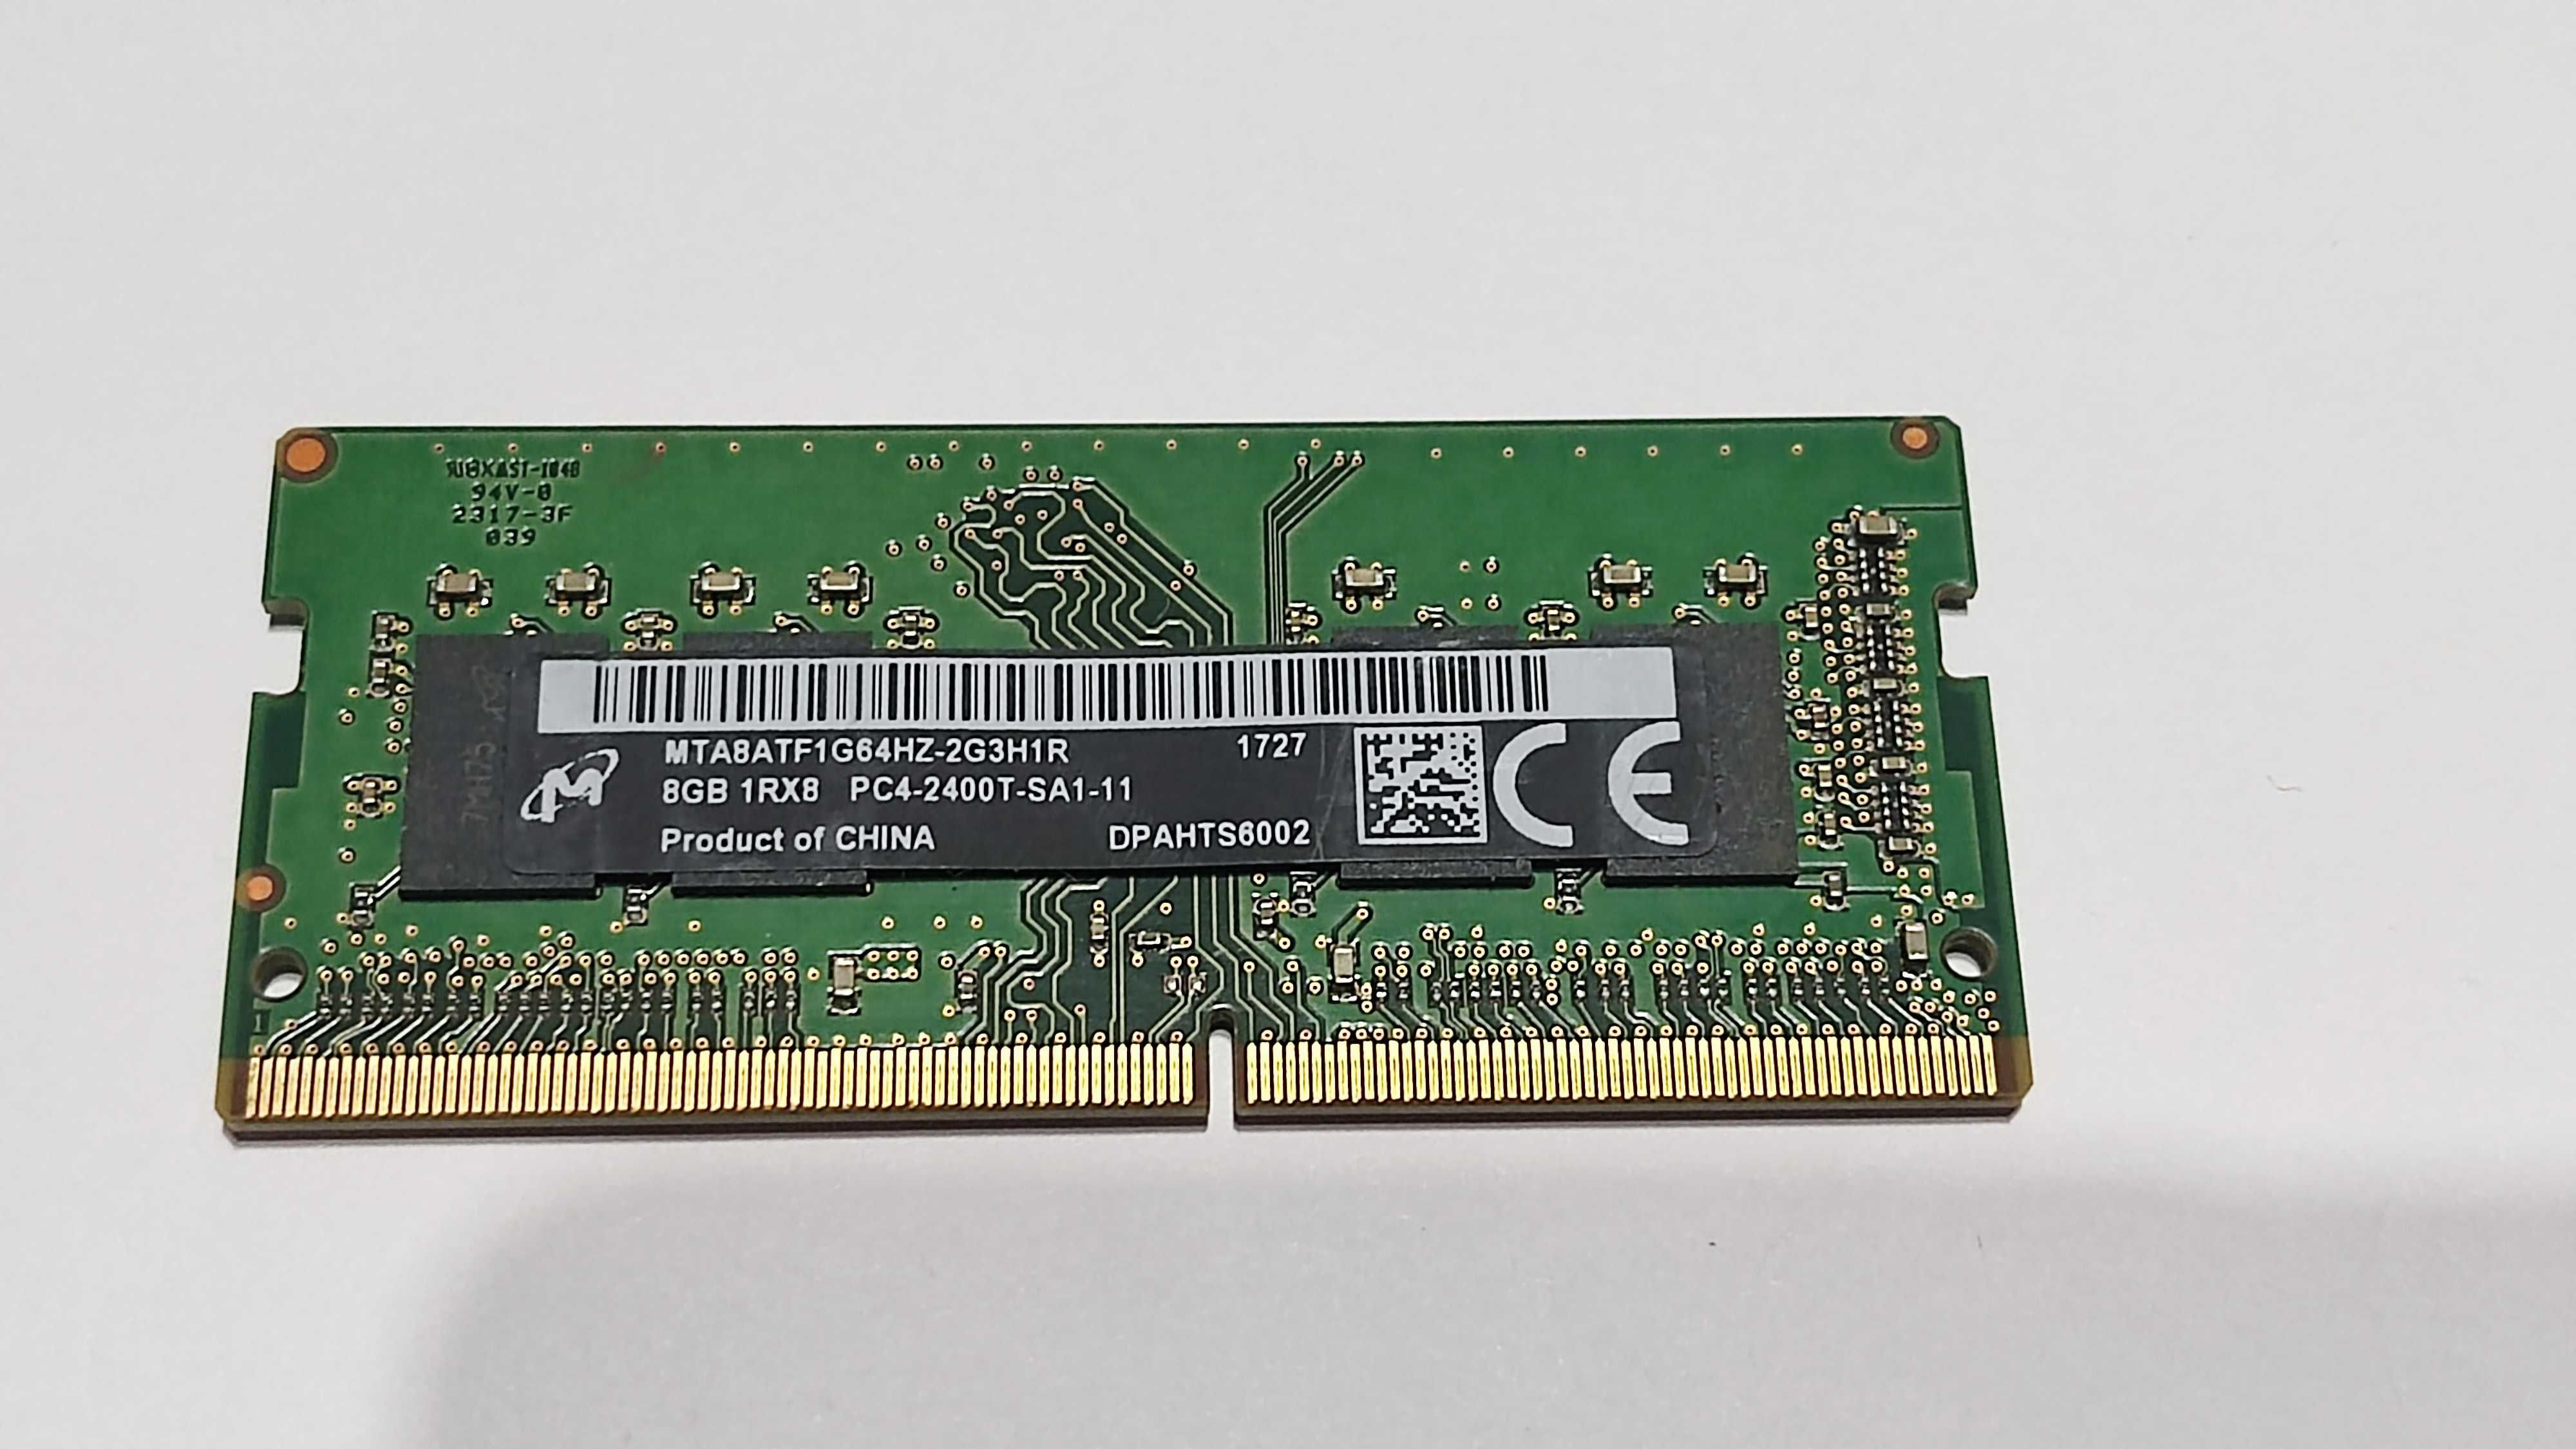 Pamieć RAM 8GB Micron 2400T DDR4 sodimm do Laptopa DDR4 Memtest